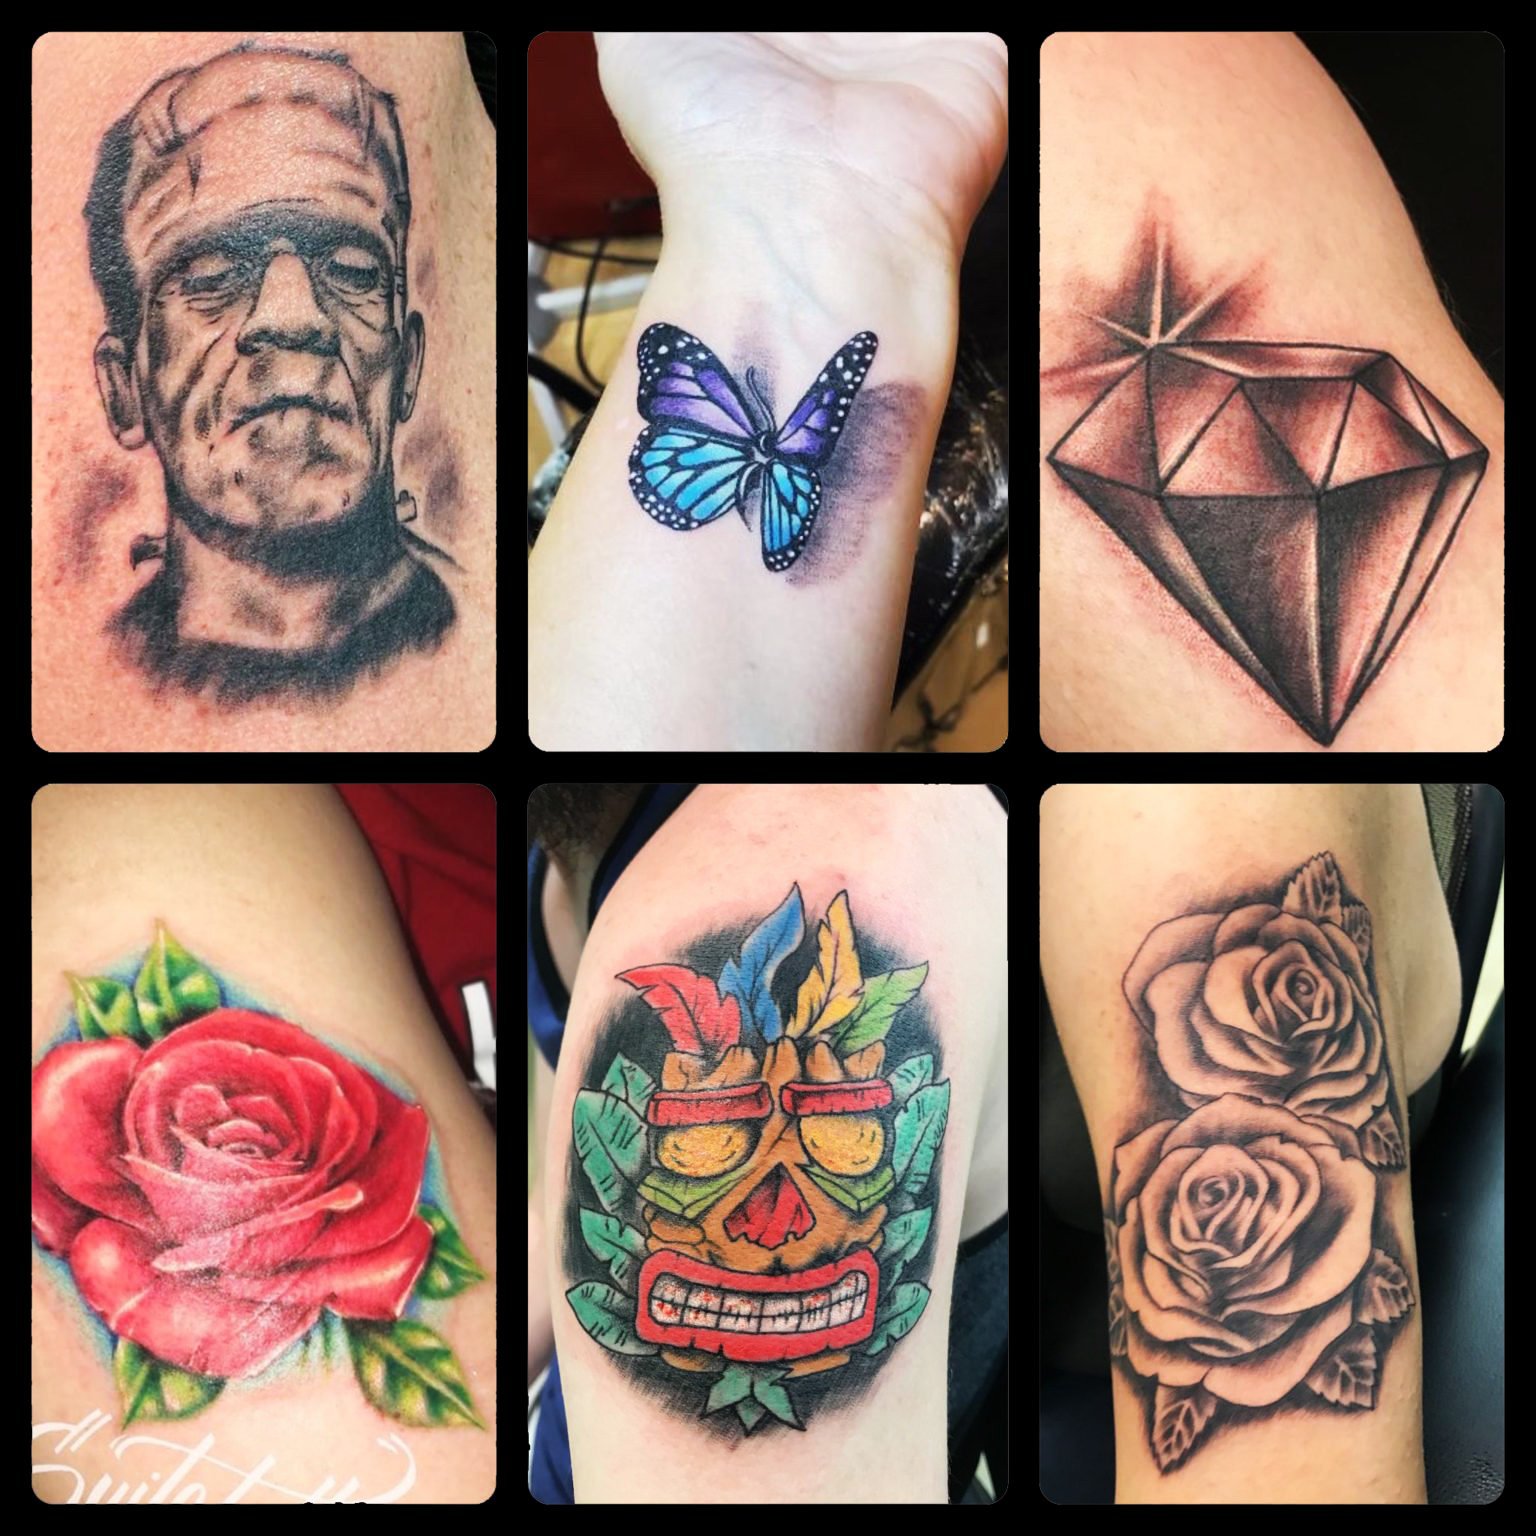 Feminine half sleeve in artists from Seven Tattoo studio in Las Vegas style  tattoo idea | TattoosAI